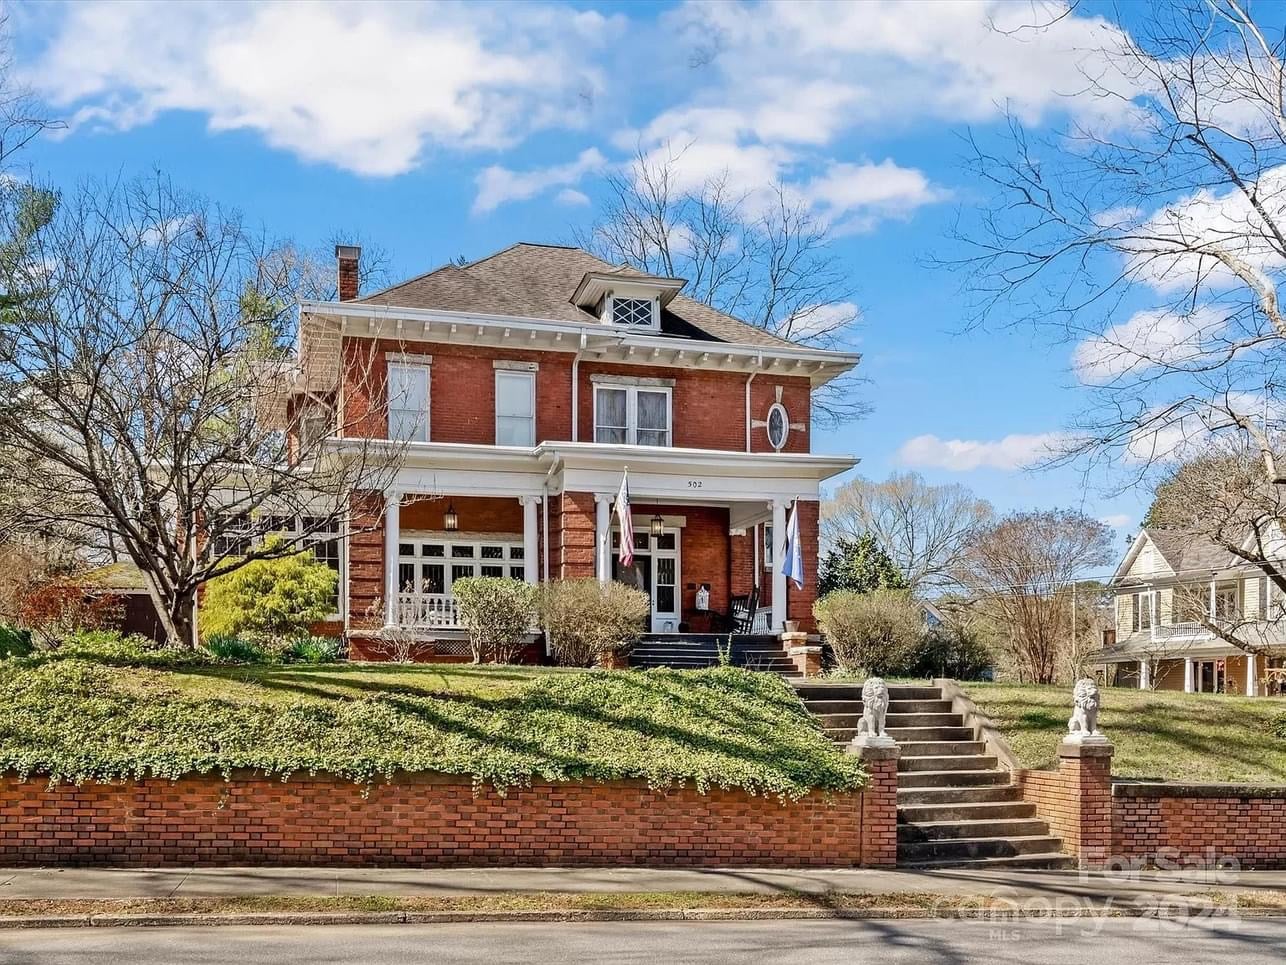 1905 Historic House For Sale In Statesville North Carolina